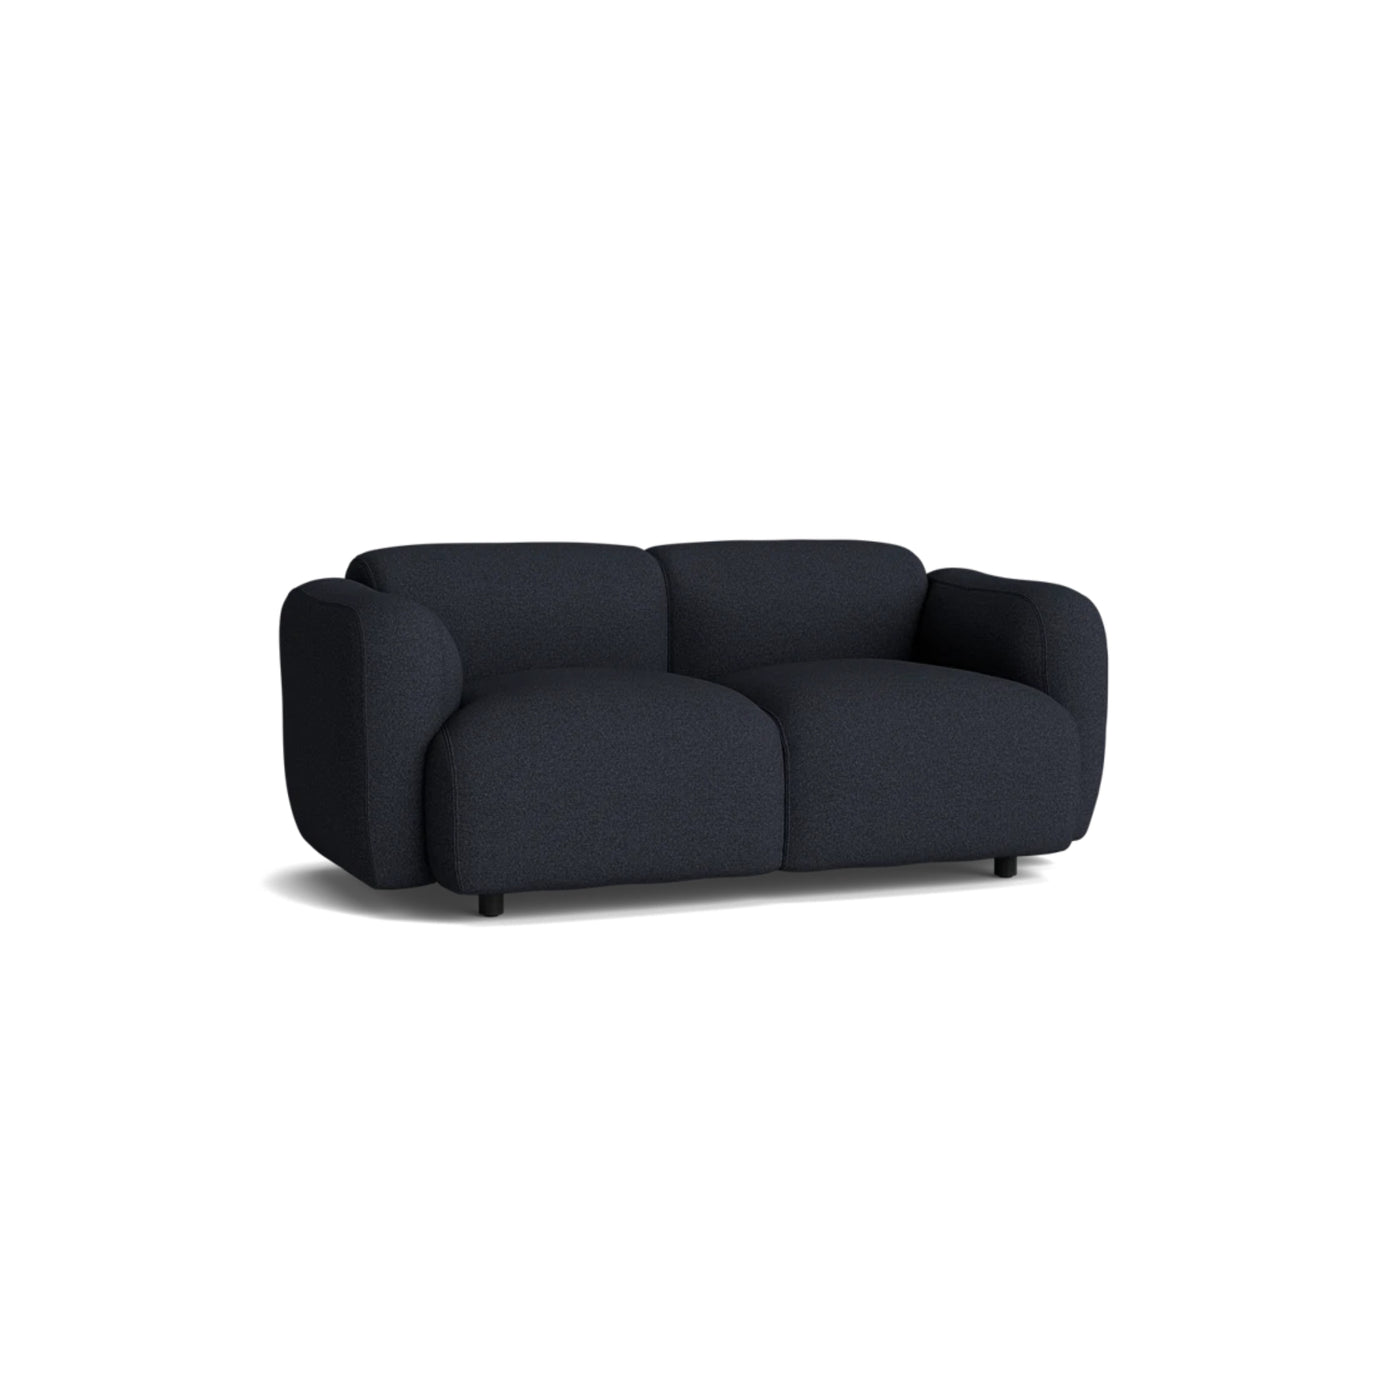 Normann Copenhagen Swell 2 Seater Sofa at someday designs. #colour_hallingdal-180